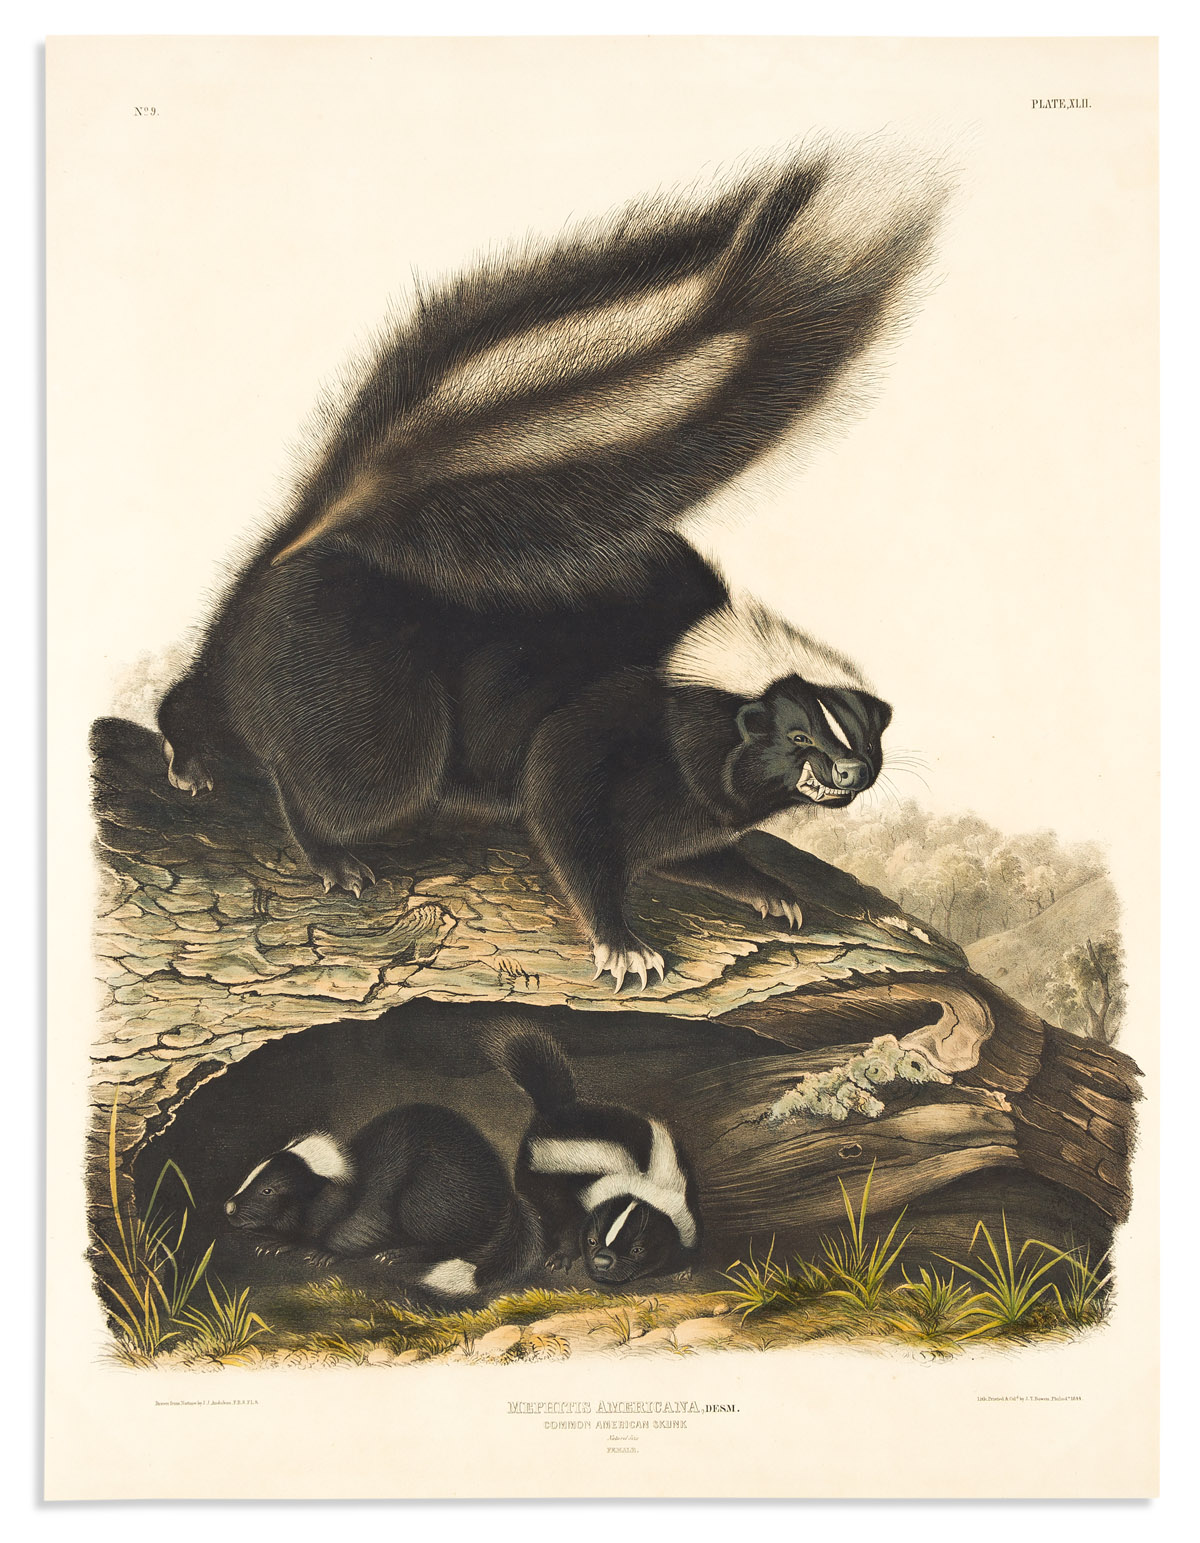 AUDUBON, JOHN JAMES. Common American Skunk. Plate XLII.